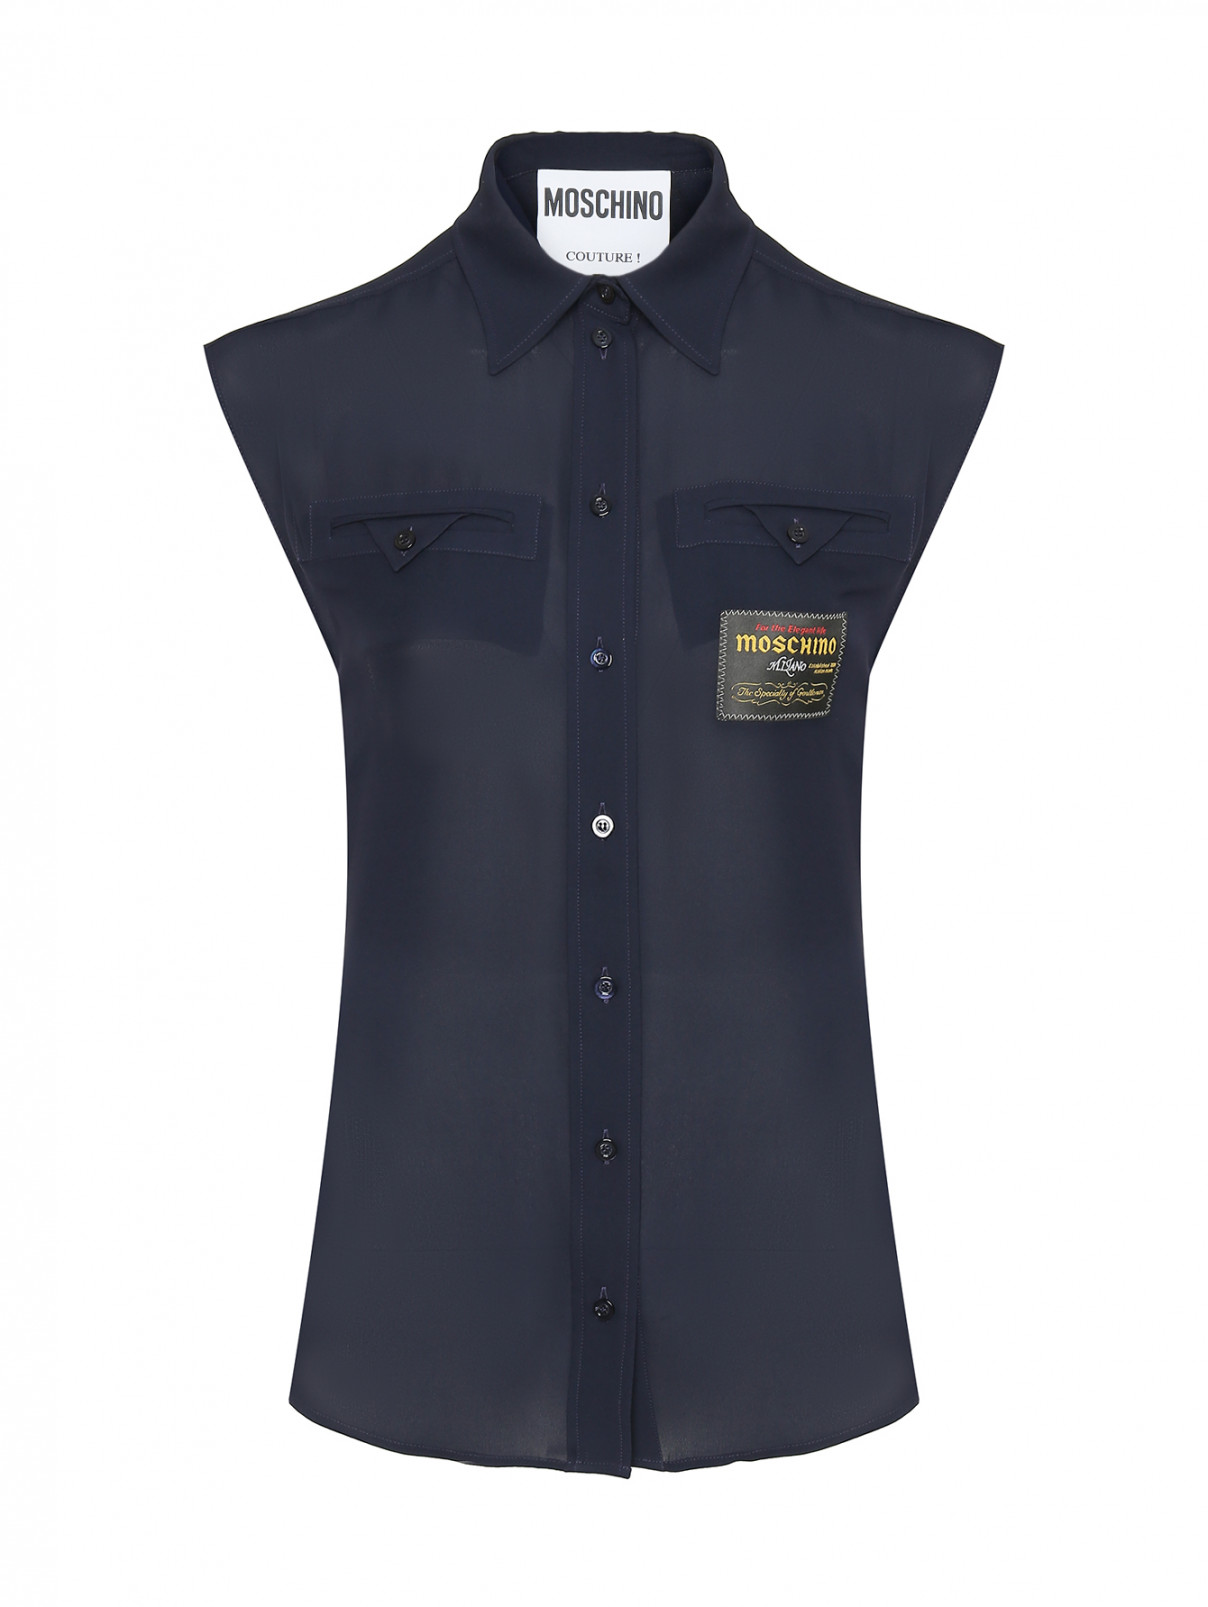 Блуза из шелка без рукавов Moschino  –  Общий вид  – Цвет:  Синий